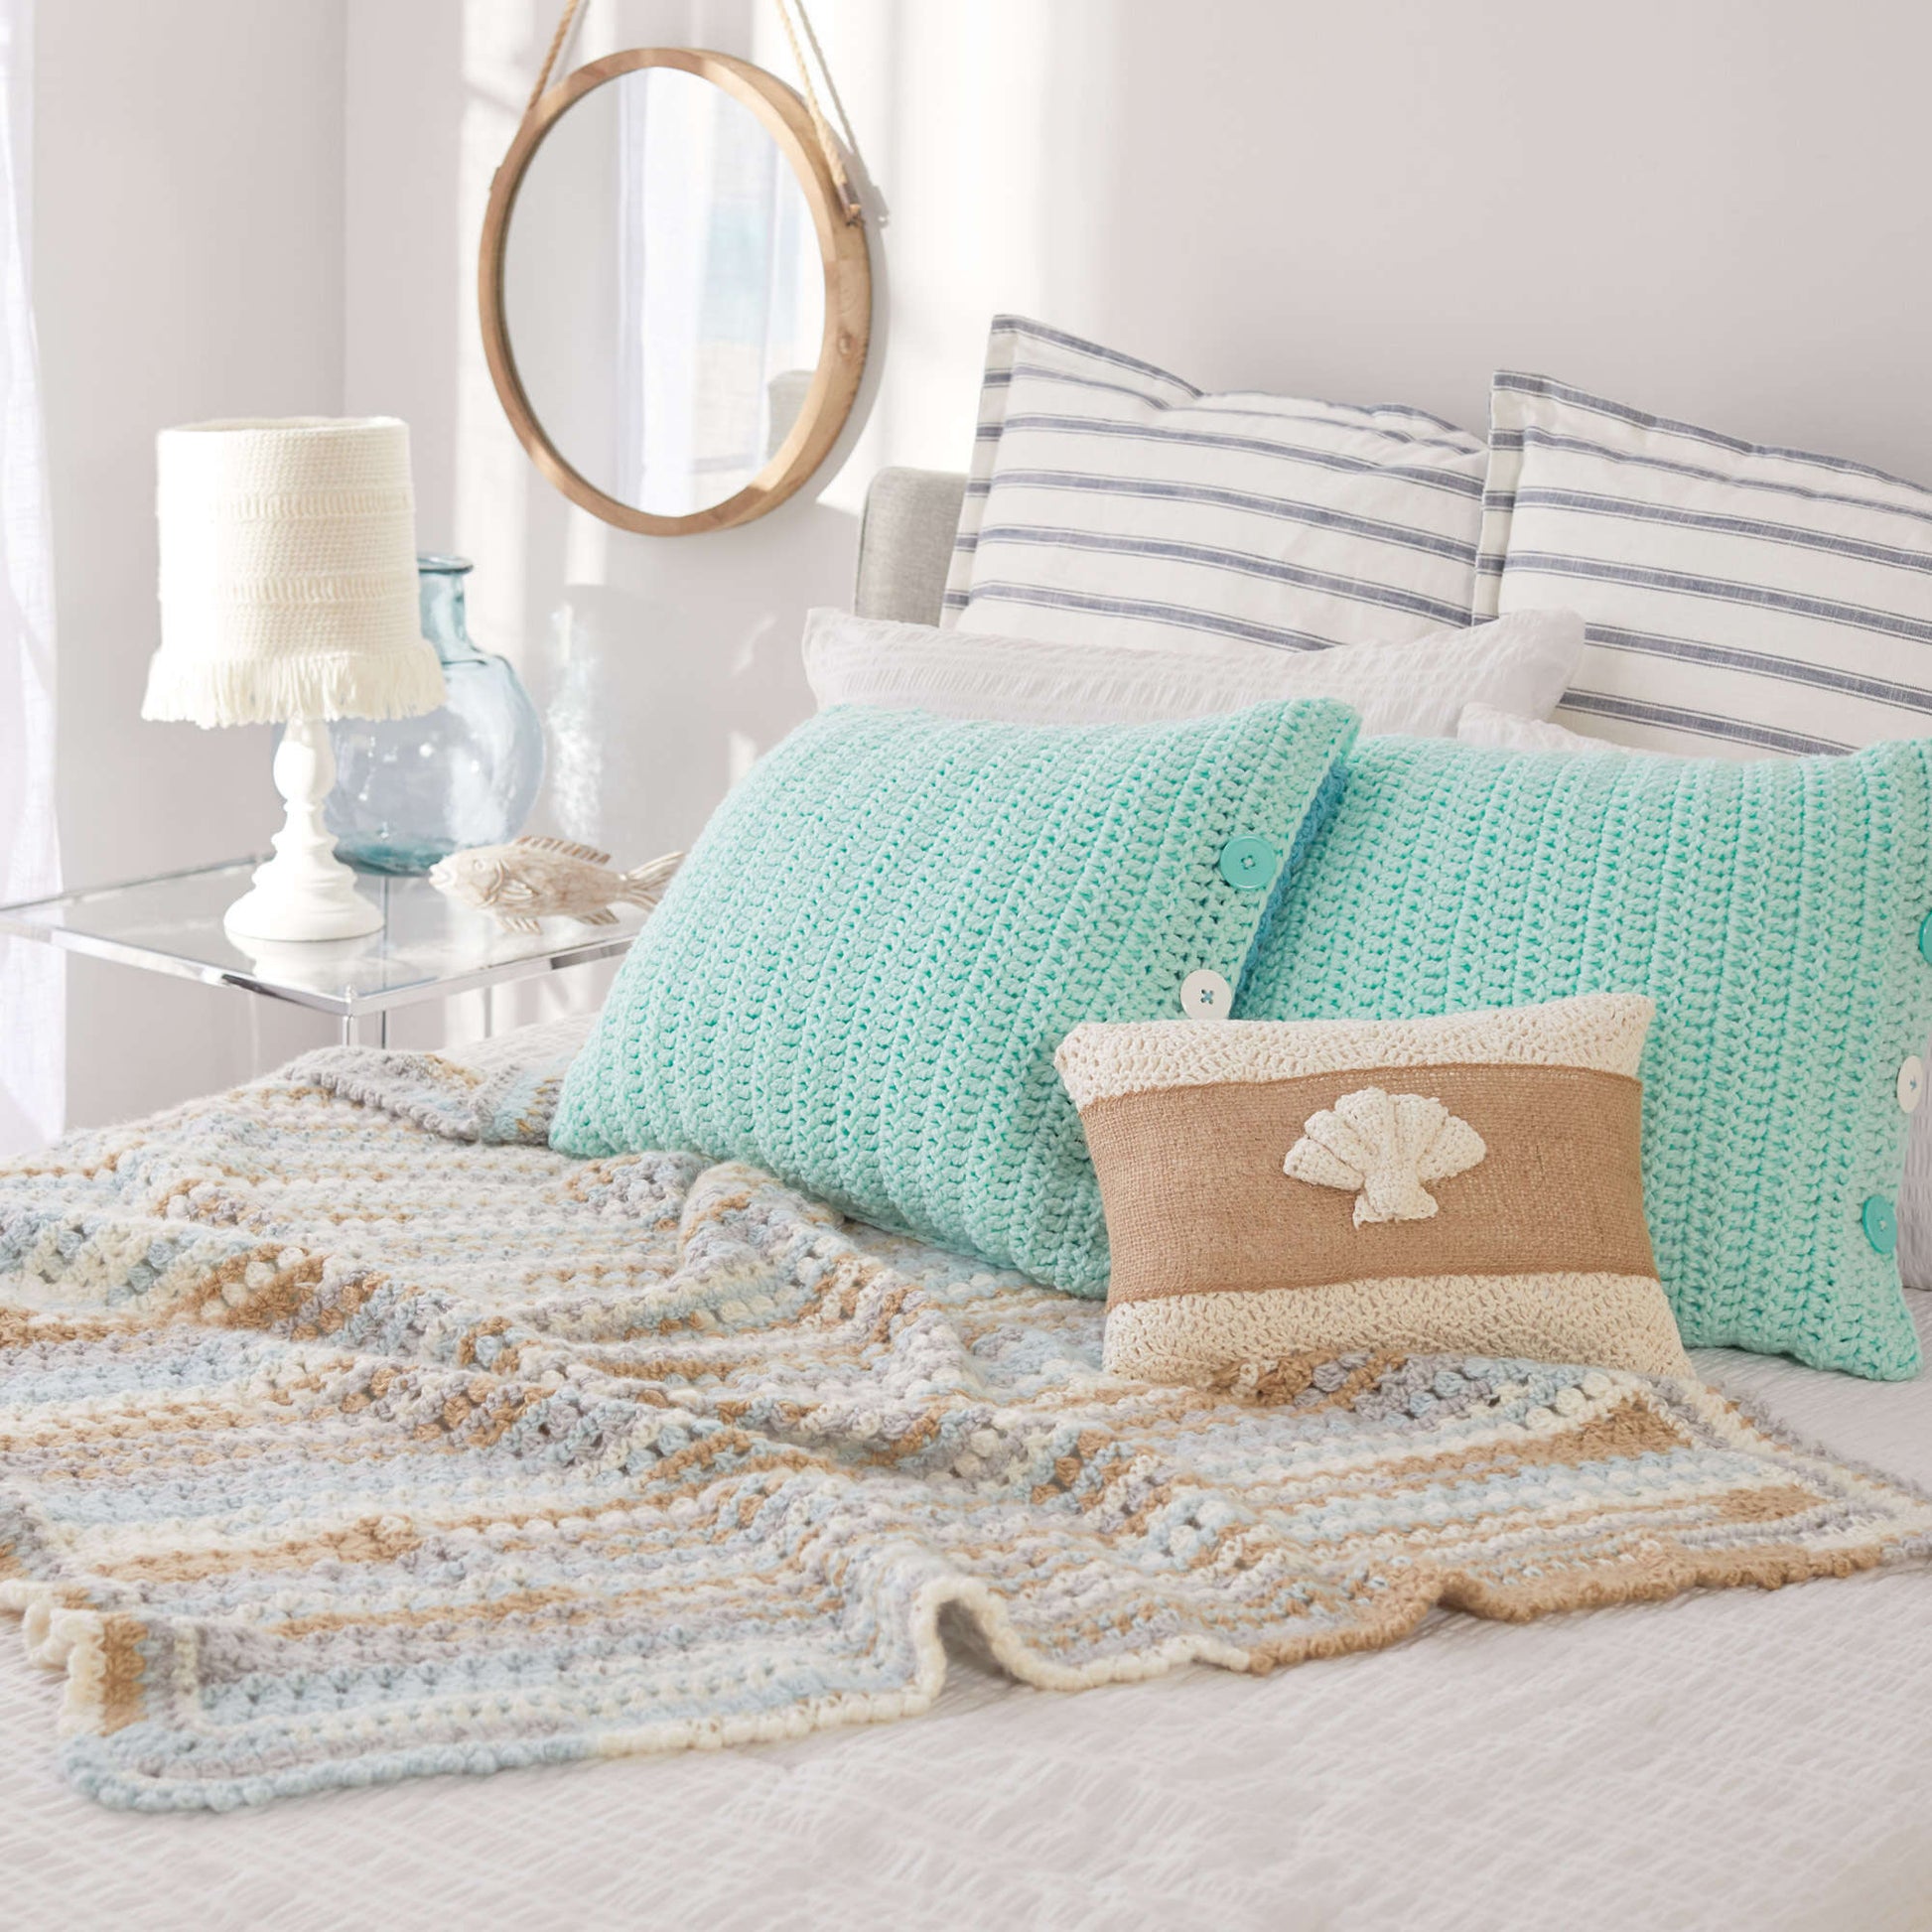 Free Red Heart Ocean Front Bed Pillows Crochet Pattern